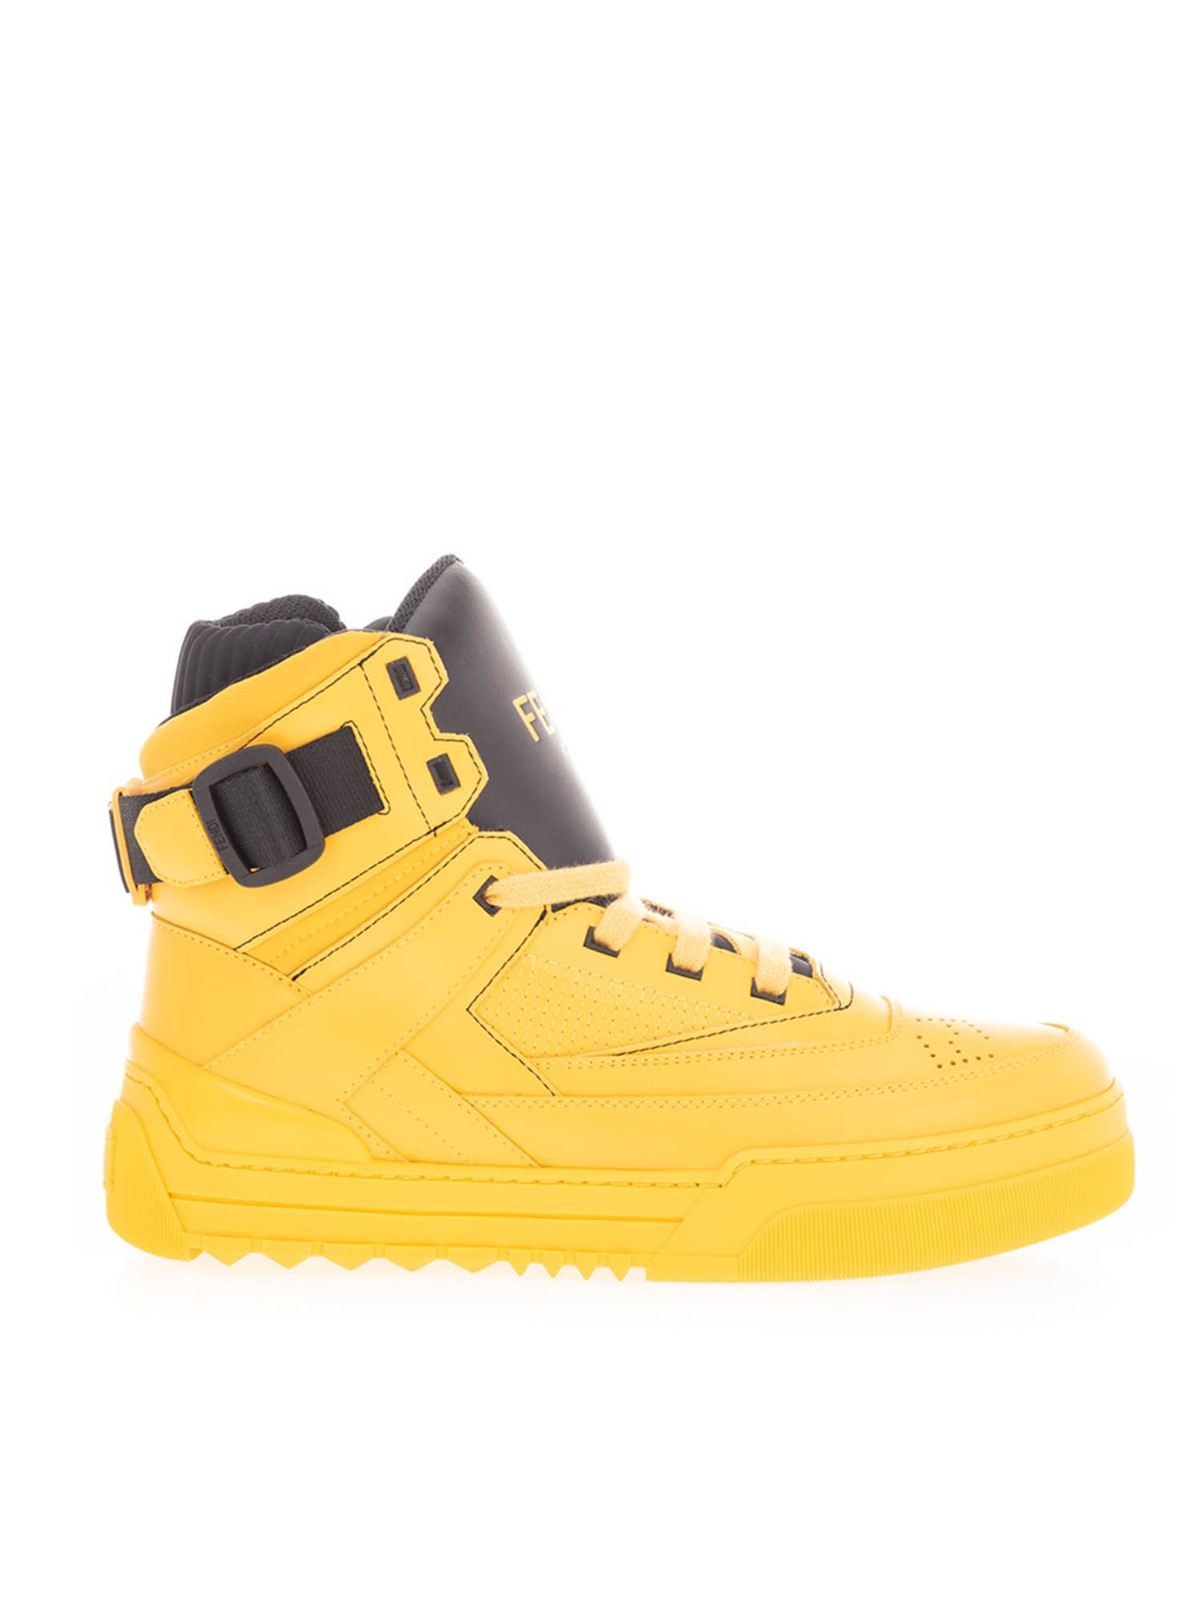 Trainers Fendi - High top sneakers in yellow - 7E1397A0U3F0454 | iKRIX.com